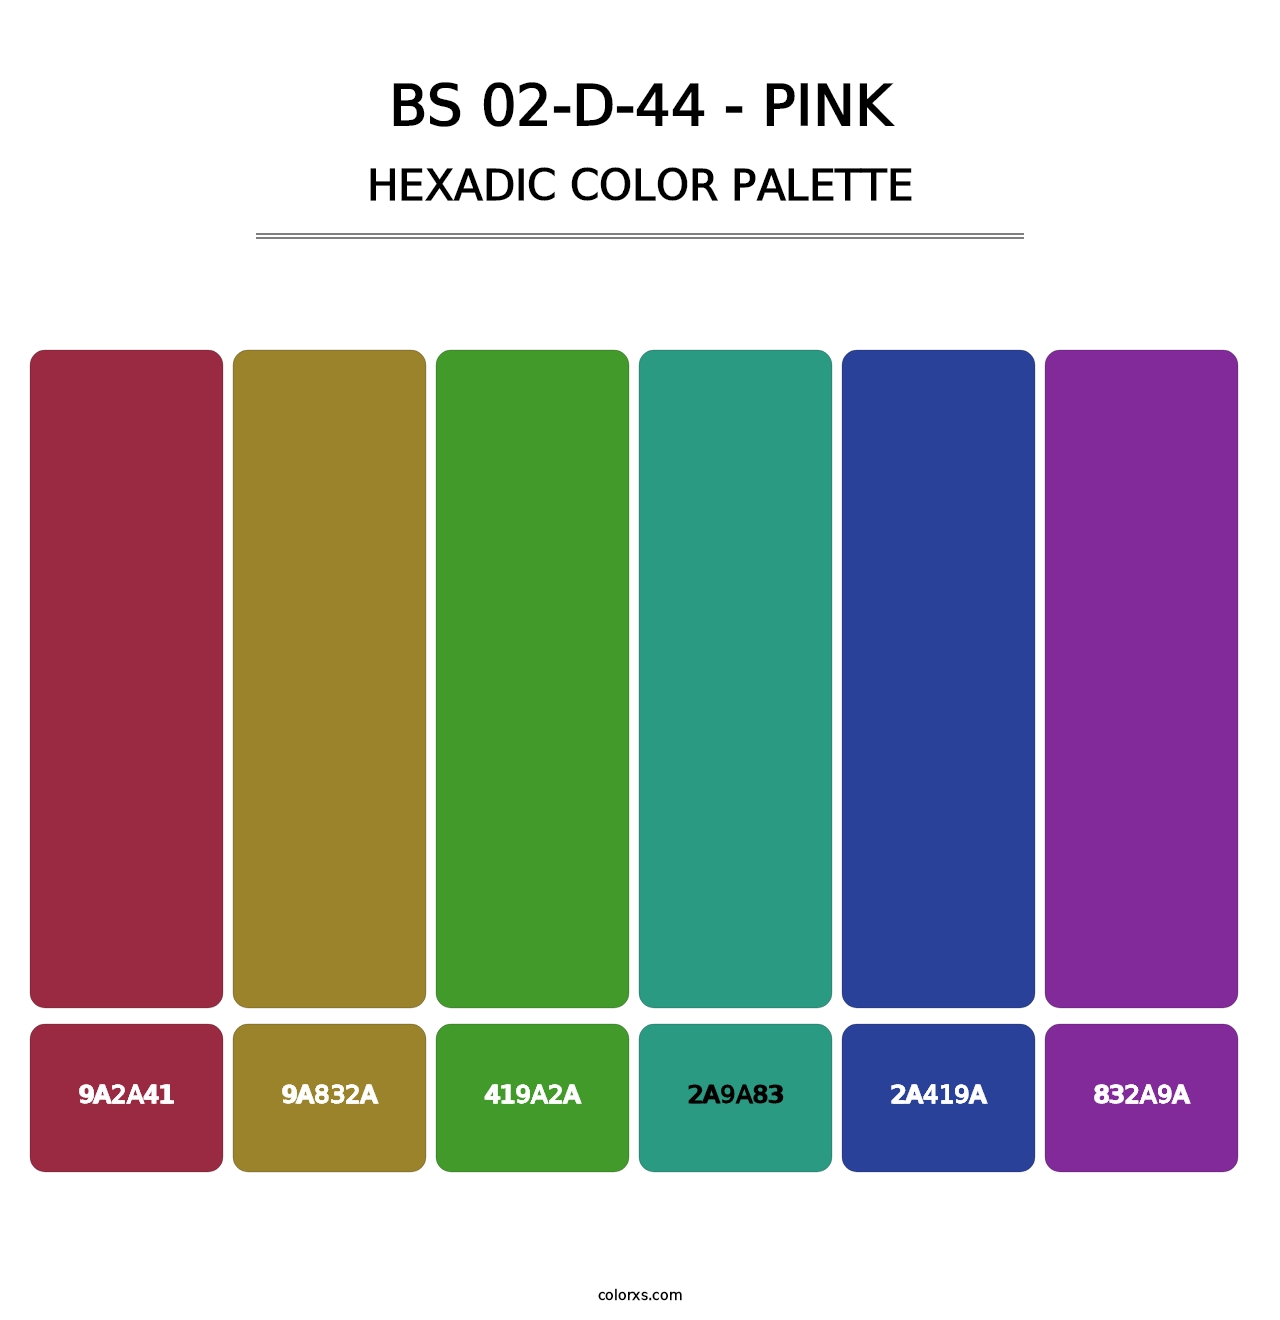 BS 02-D-44 - Pink - Hexadic Color Palette